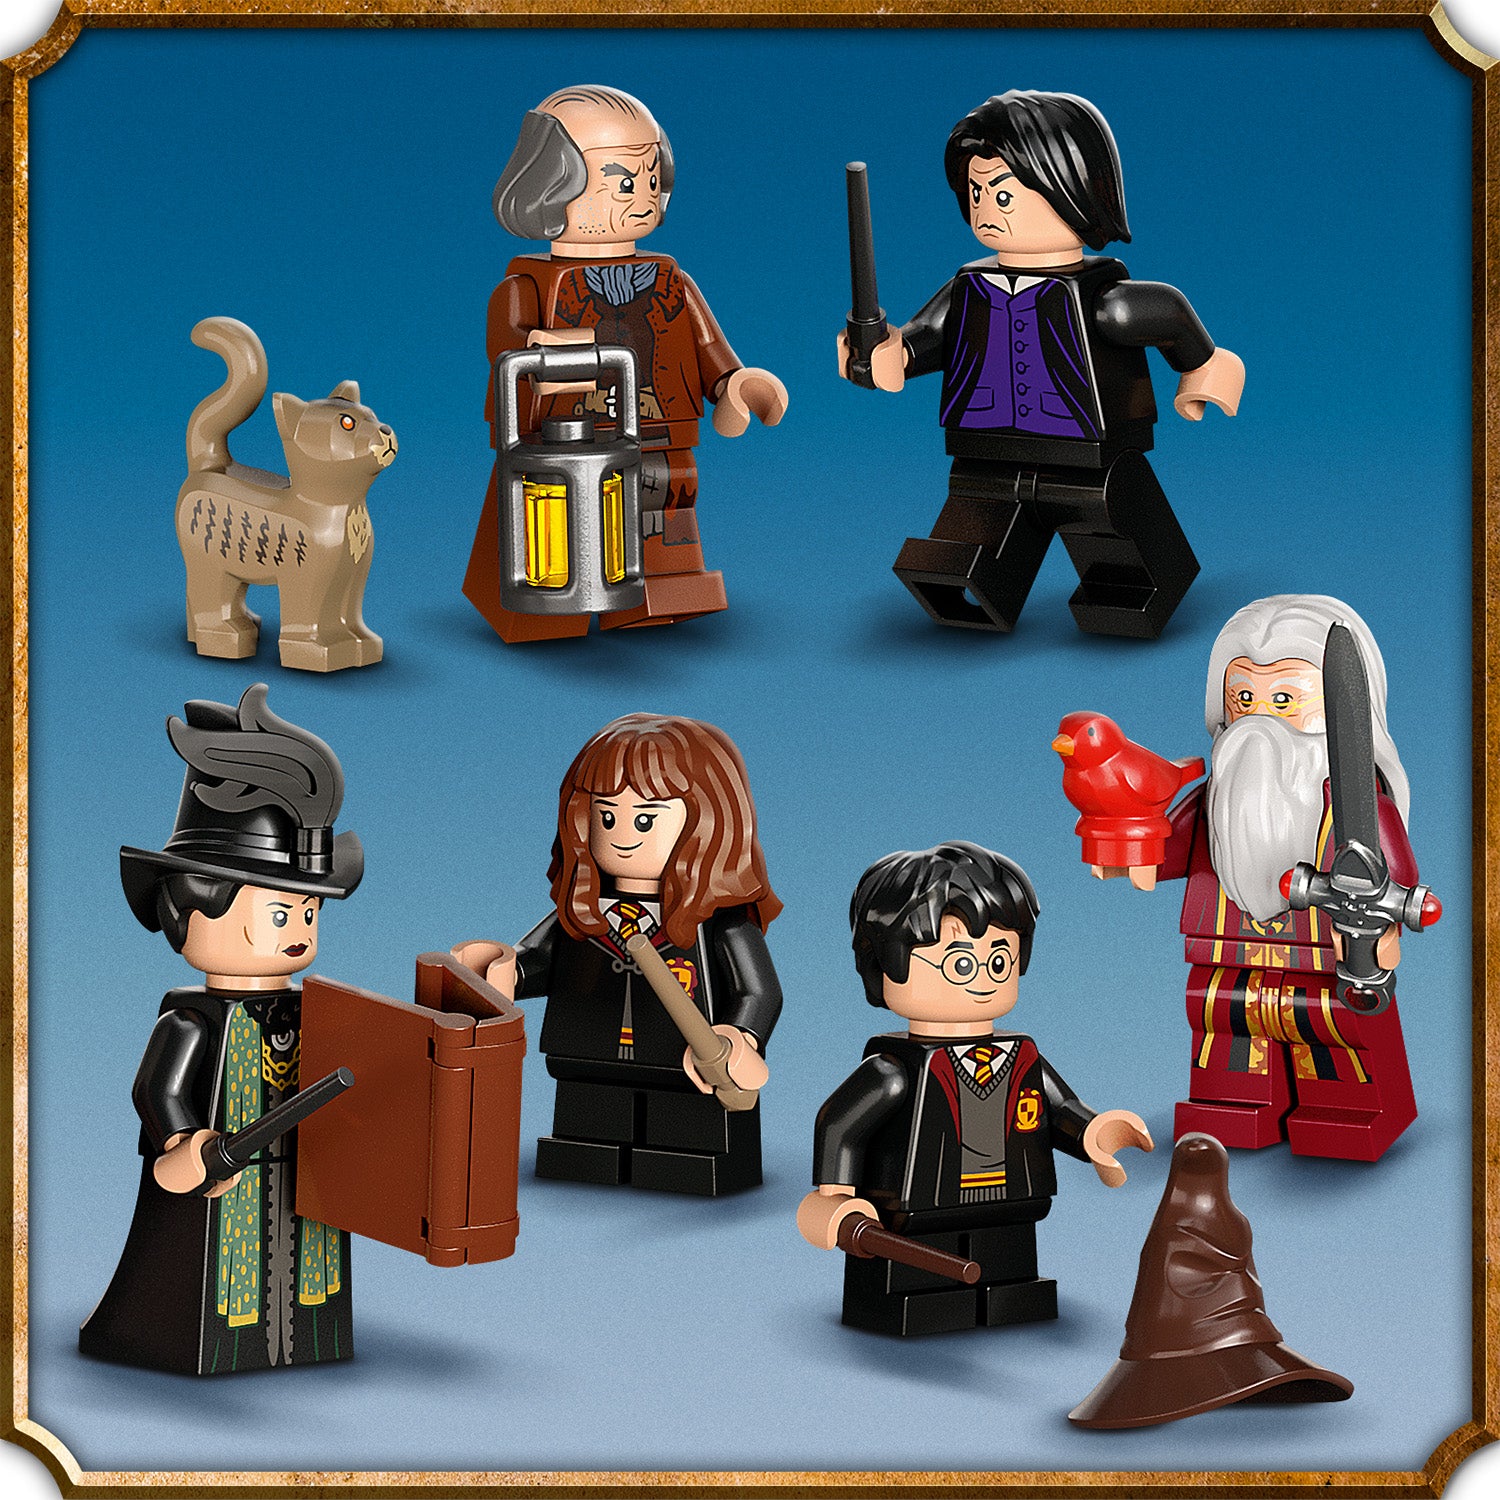 Lego 76402 Harry Potter Dumbledores Office